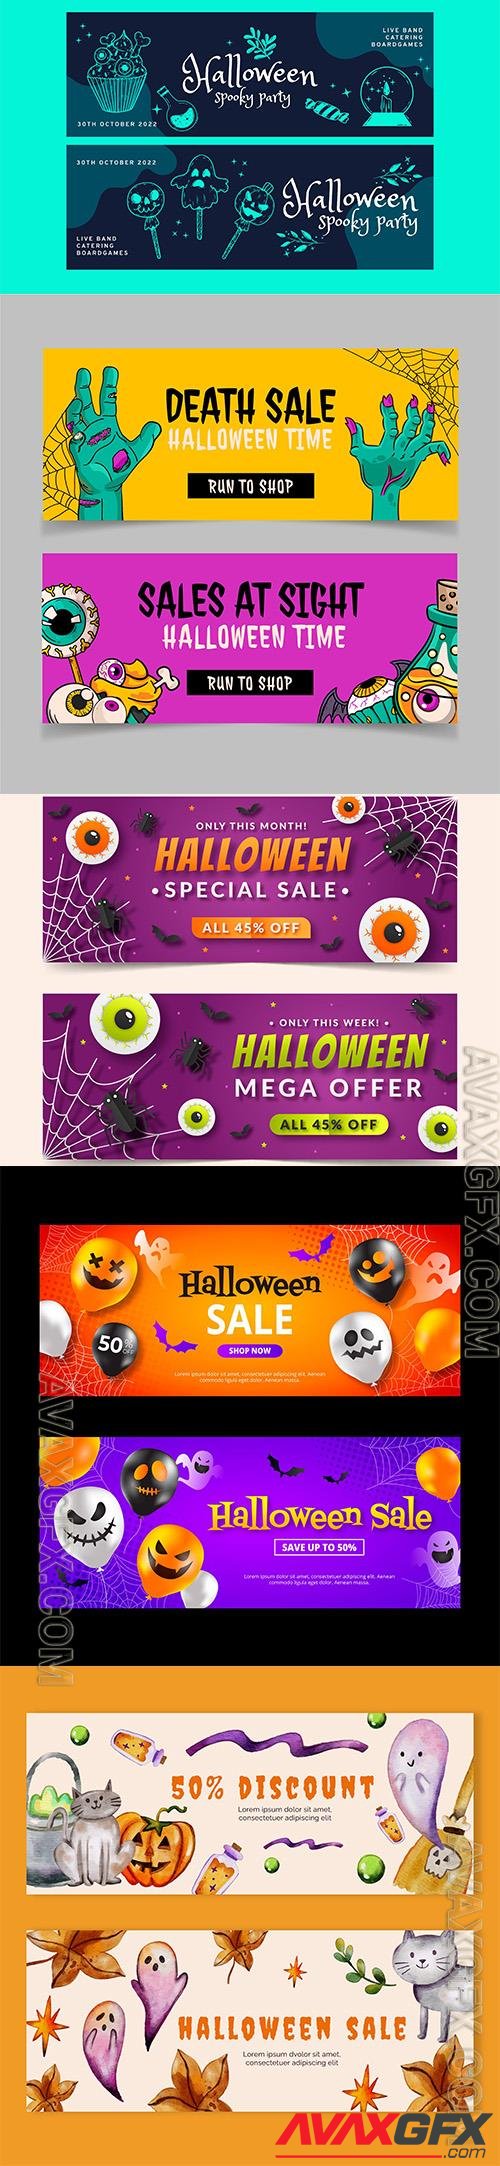 Halloween horizontal banners set vol2